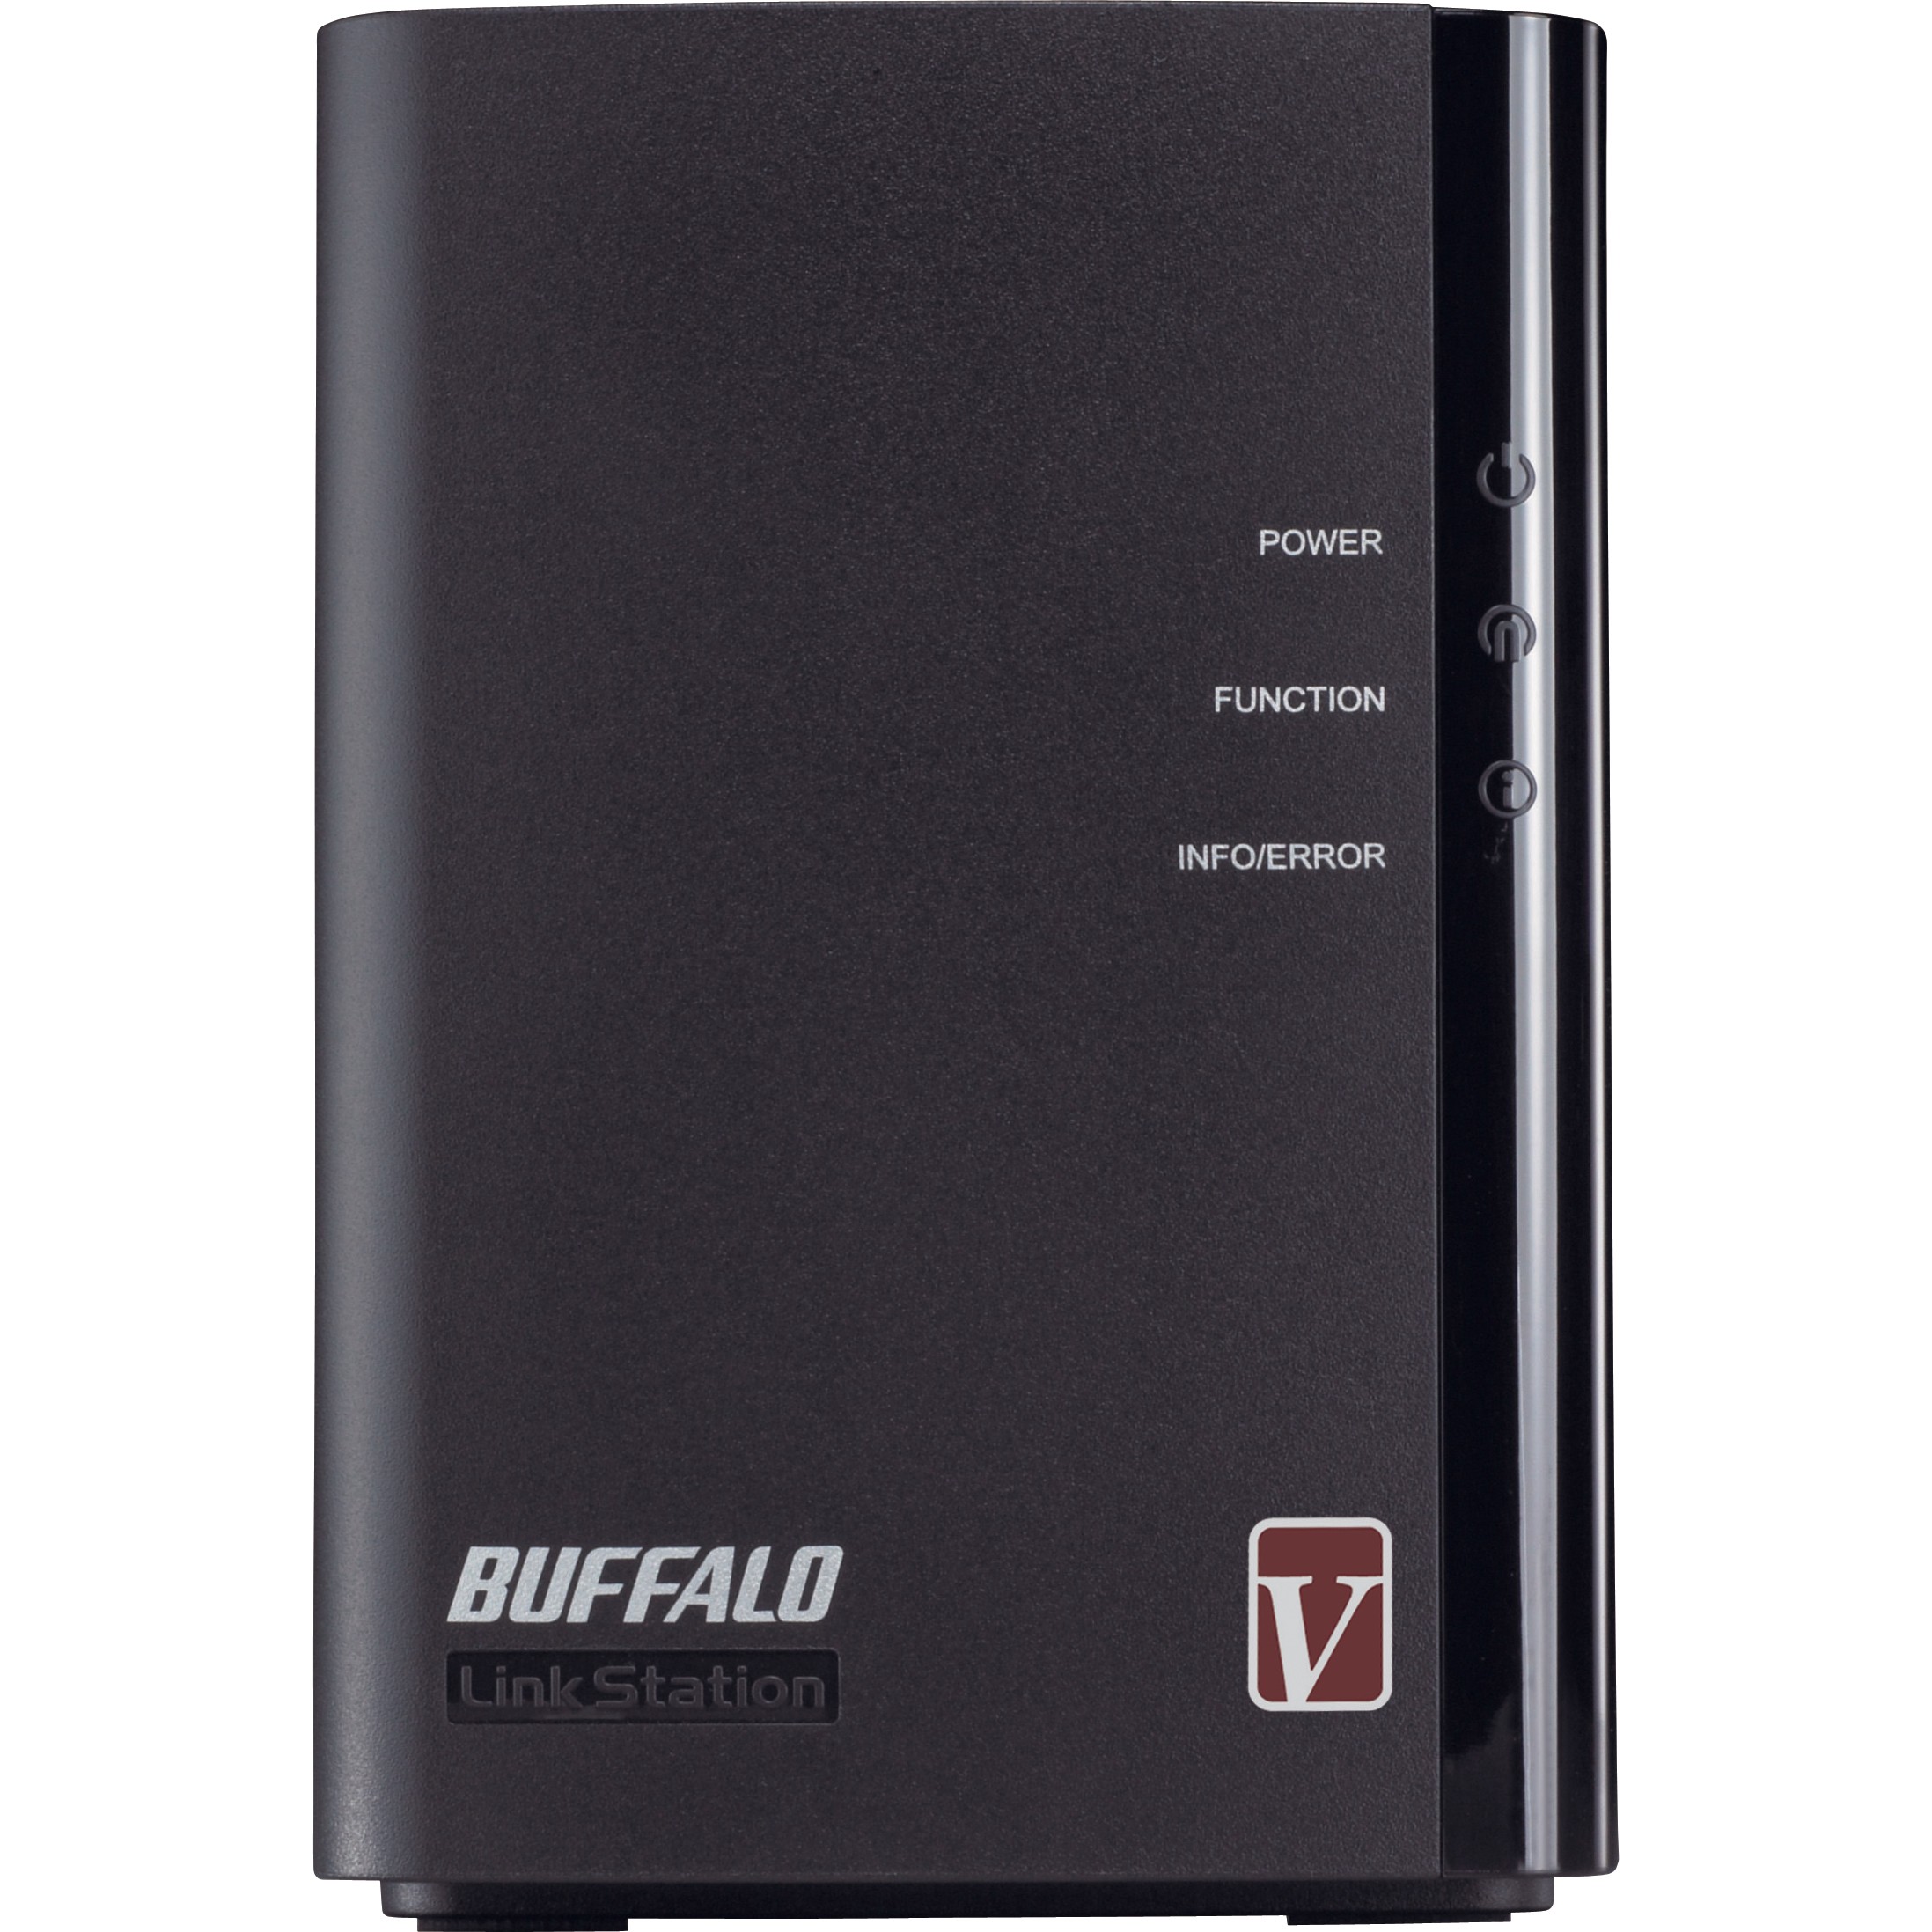 akse tackle Skænk Best Buy: Buffalo LinkStation Pro Duo 6TB 2-Drive Network Storage  LS-WV6.0TL/R1